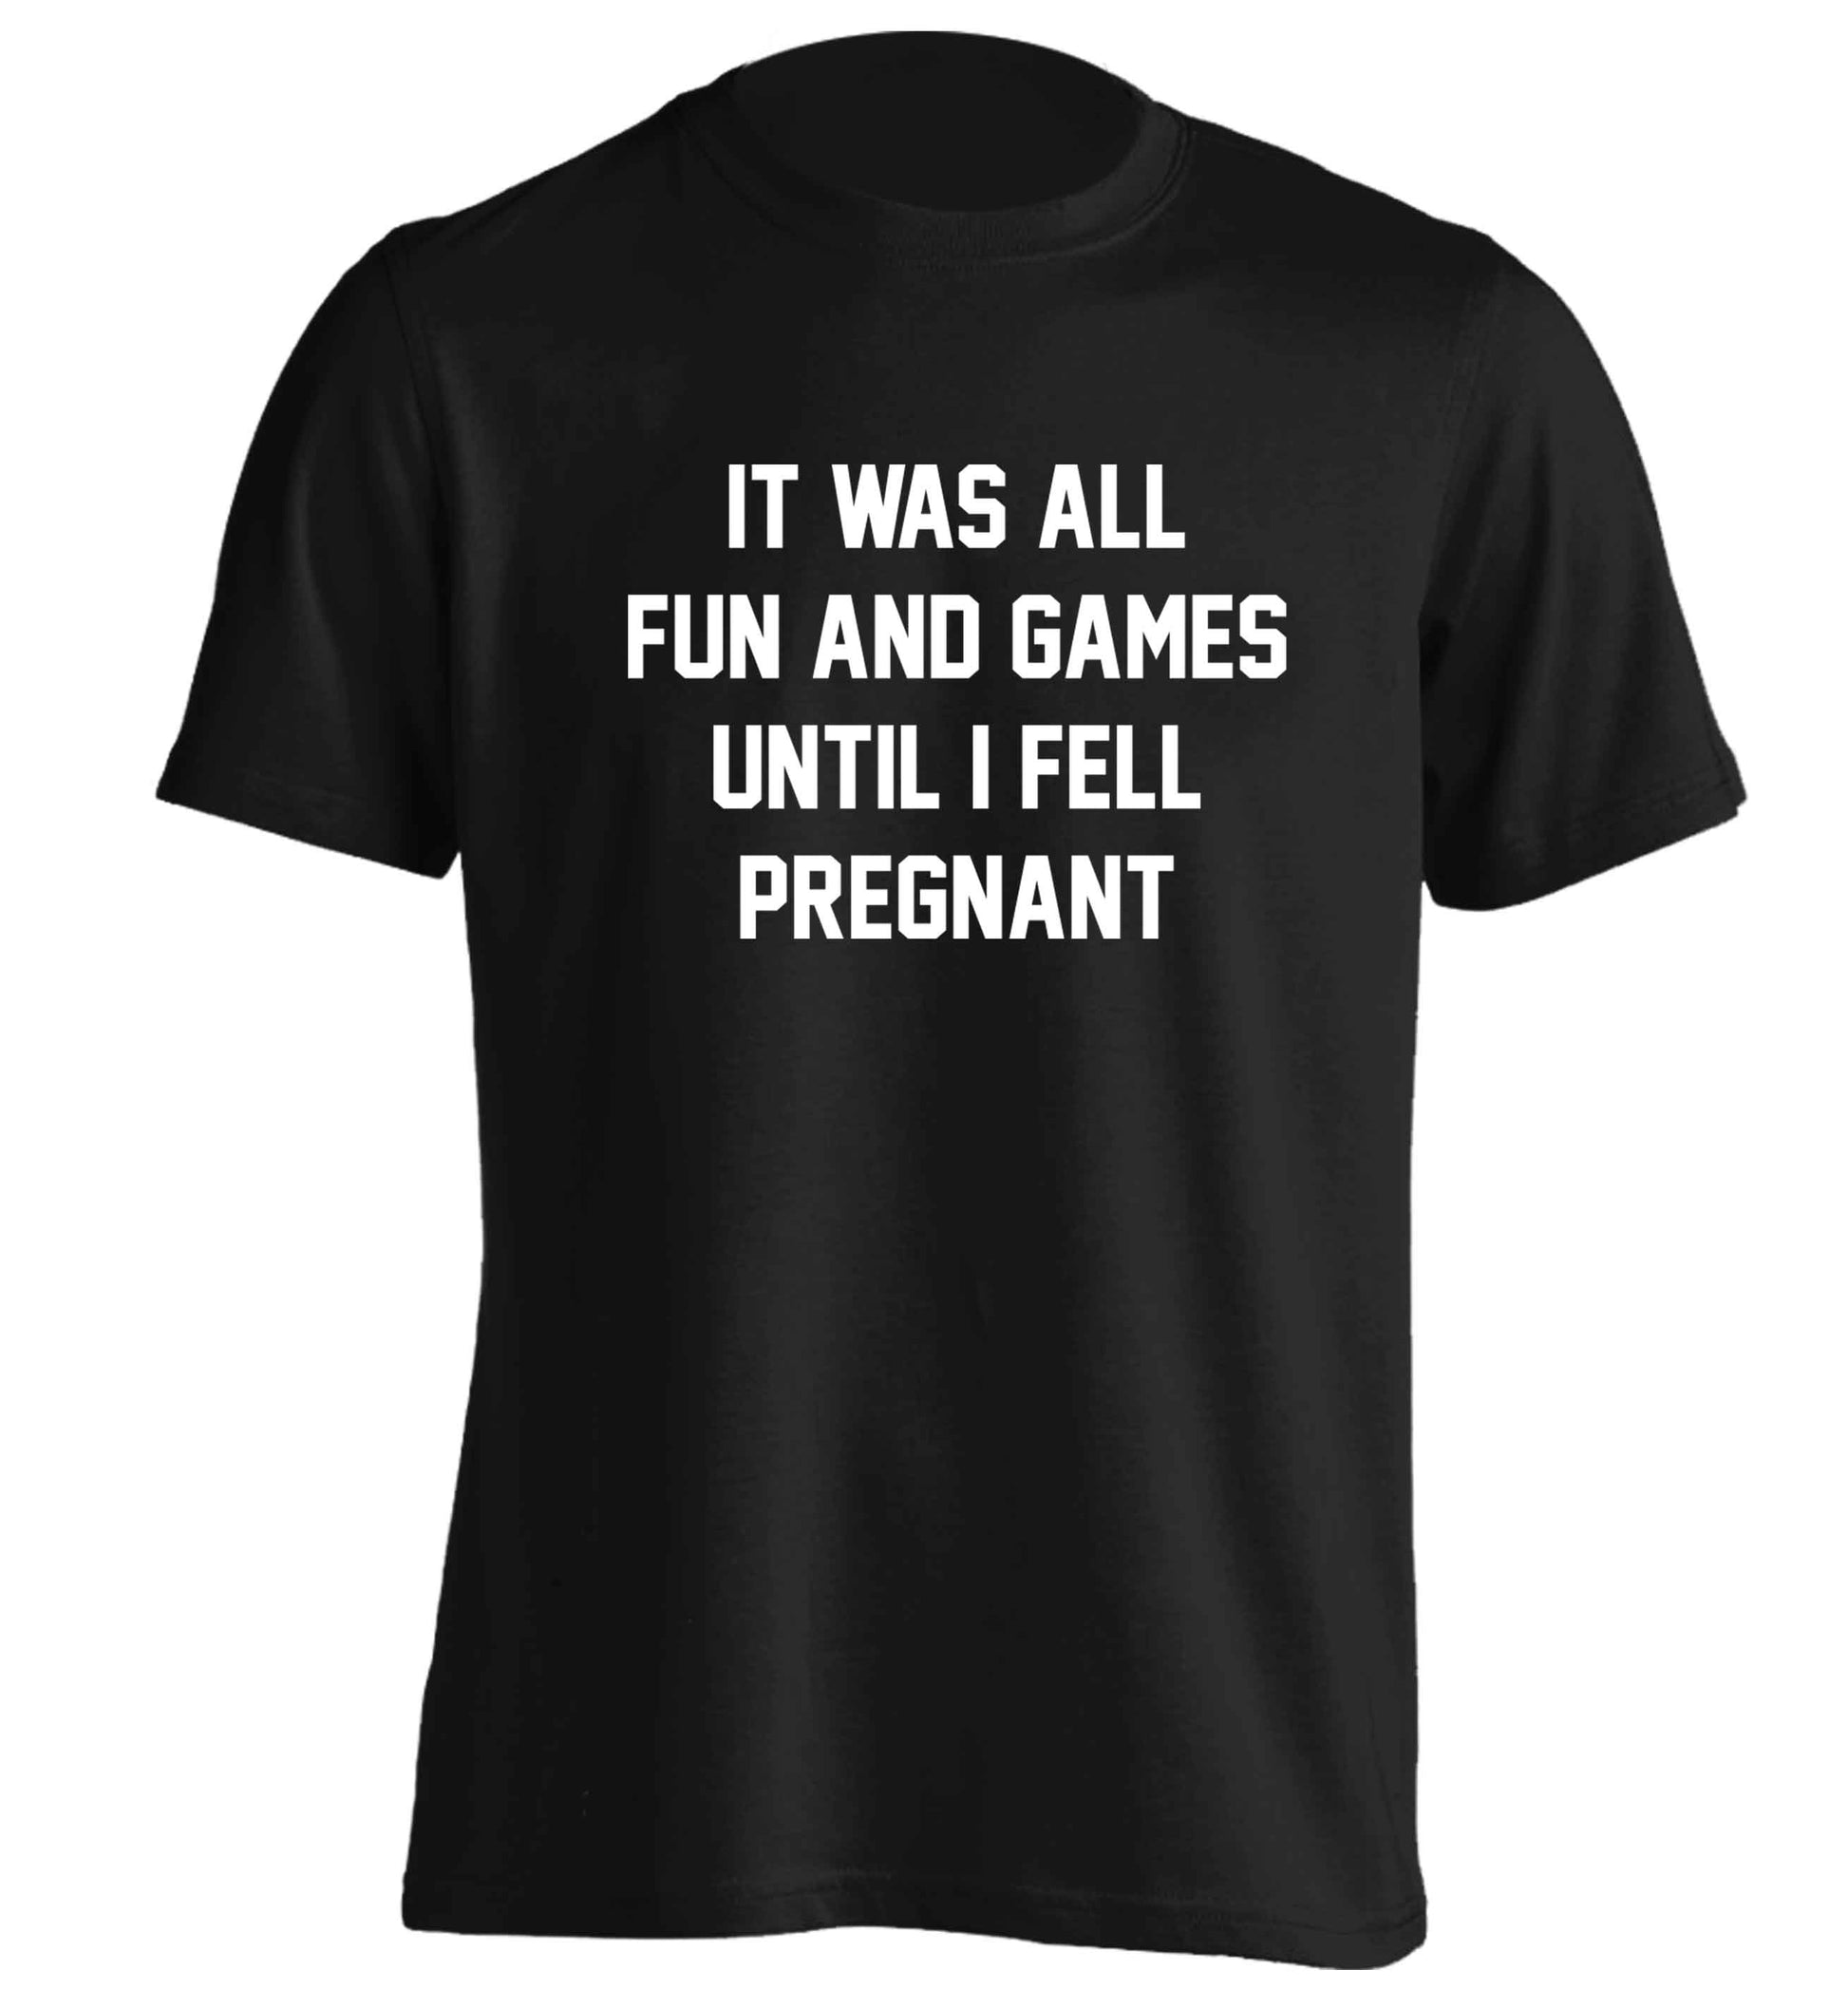 It was all fun and games until I fell pregnant kicks adults unisex black Tshirt 2XL